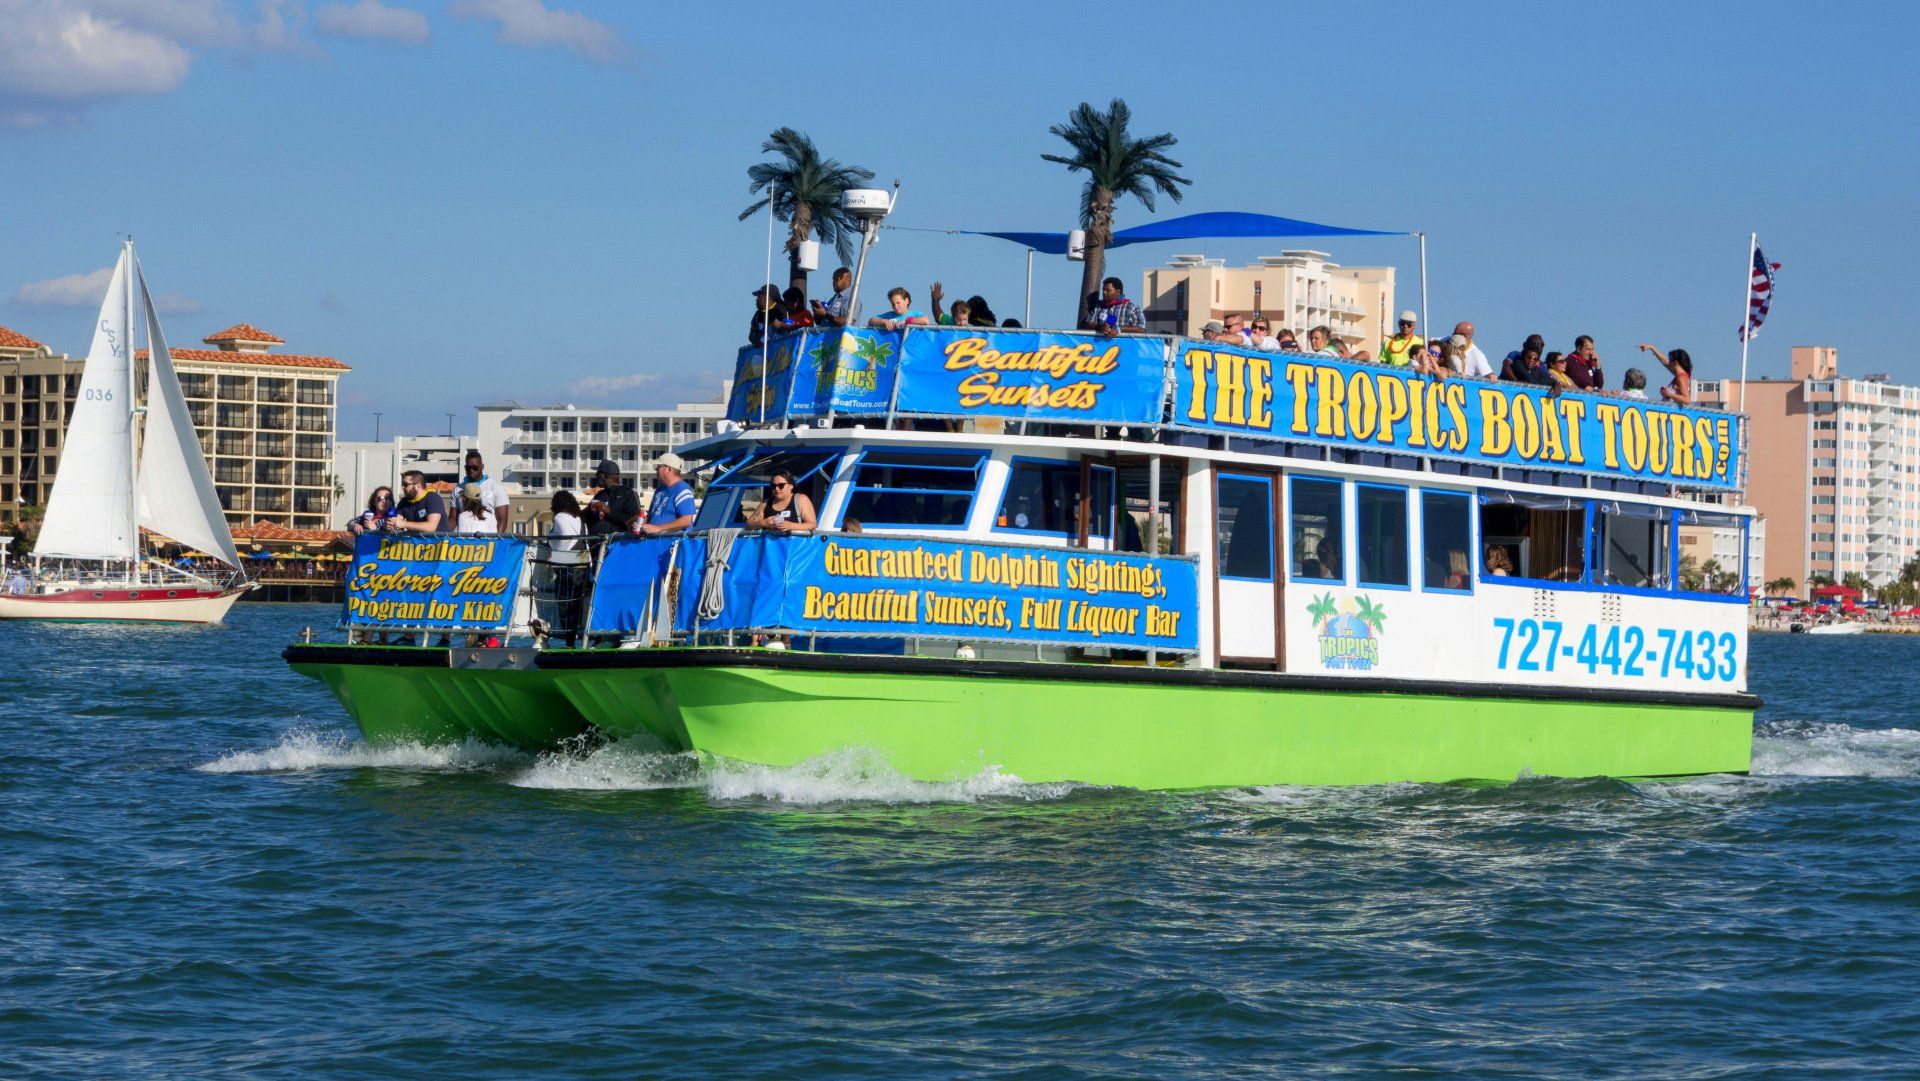 tropics boat tours promo code